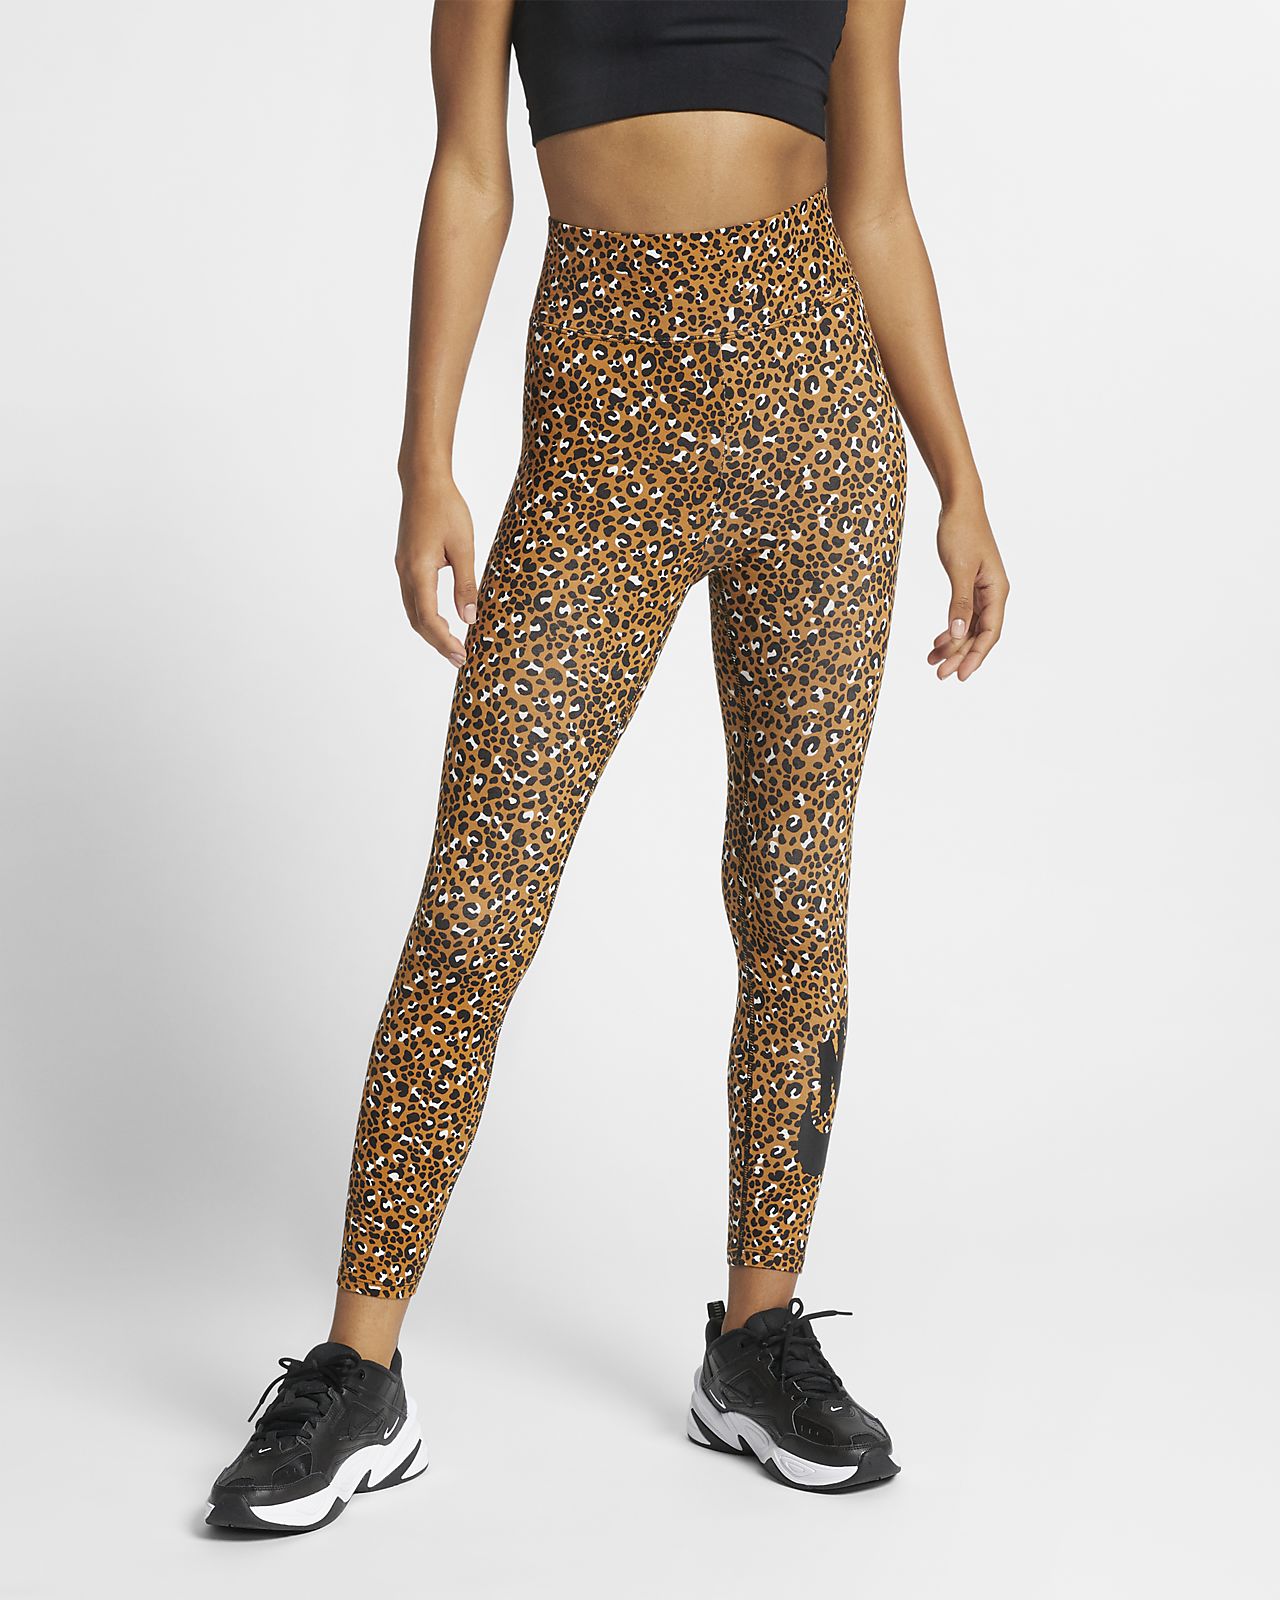 leopard print gym leggings nike